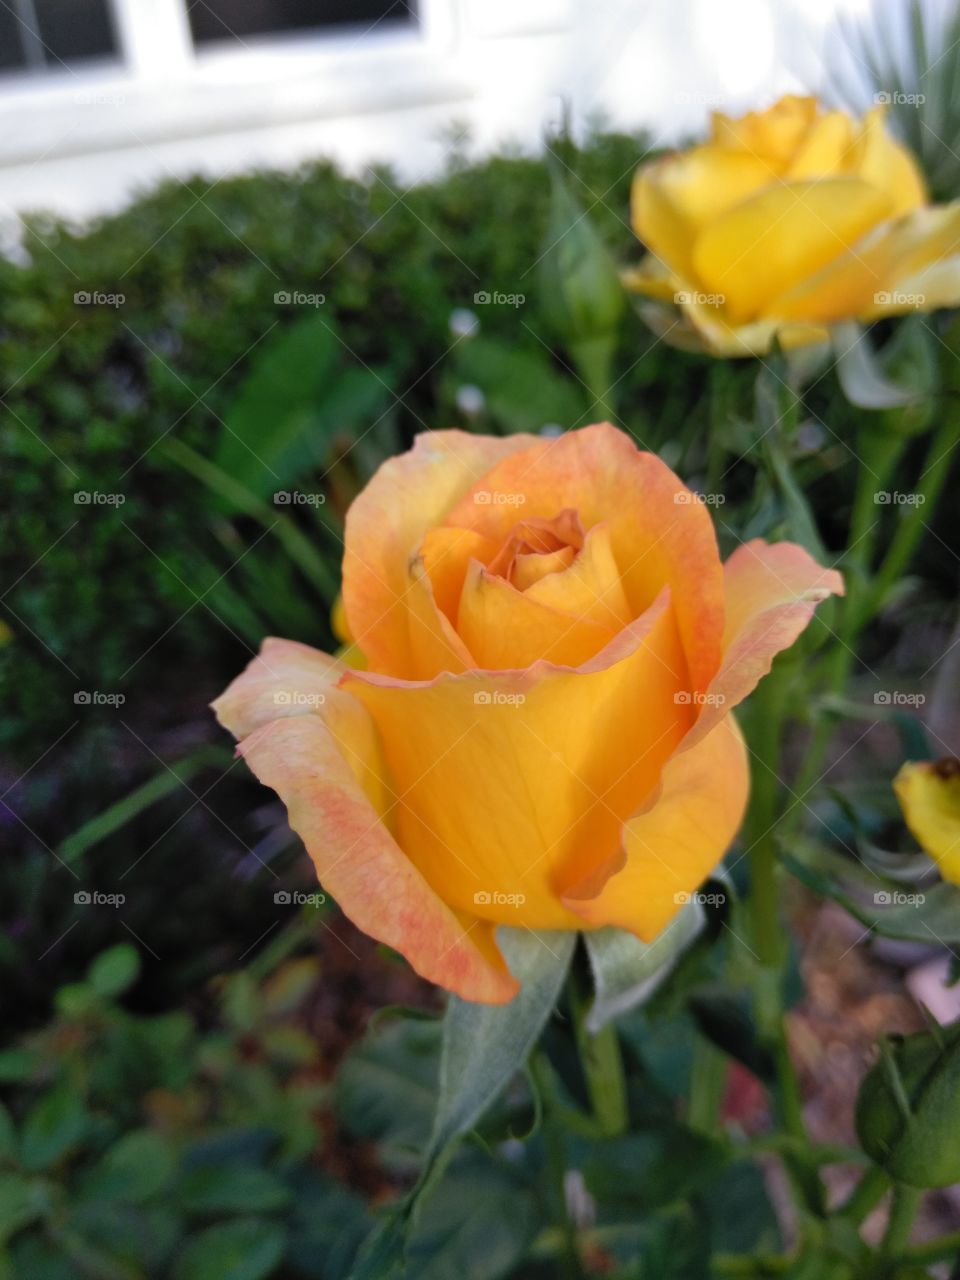 Peace hybrid rose